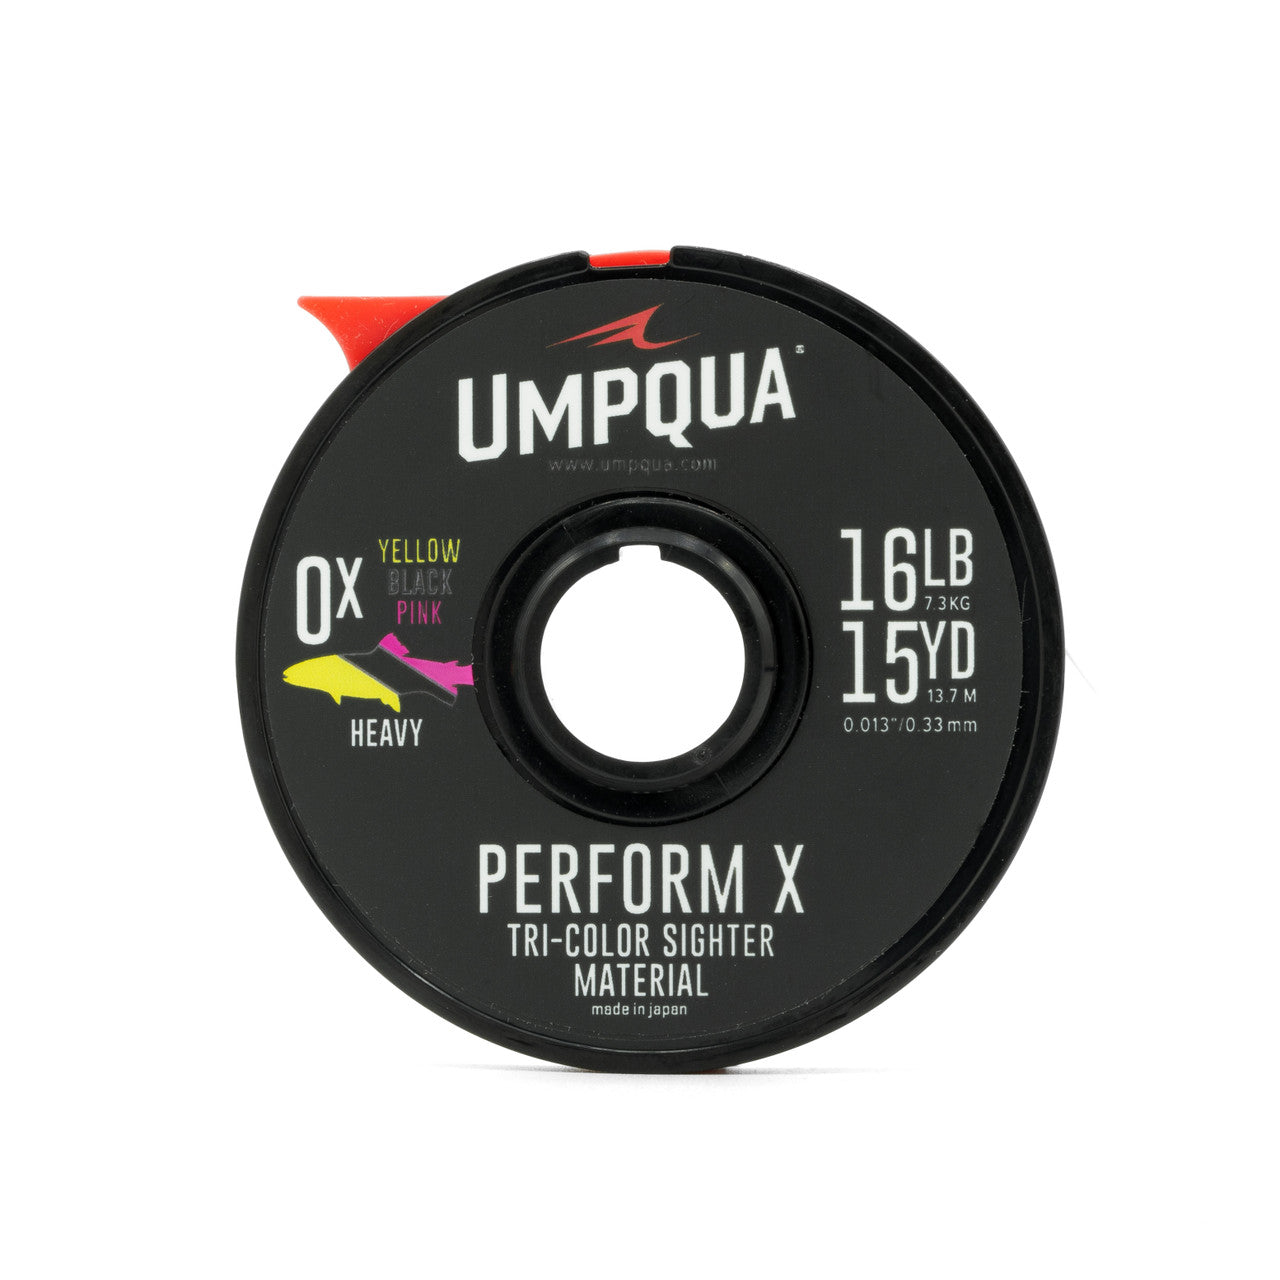 Umpqua Perform X Tri-Color Sighter